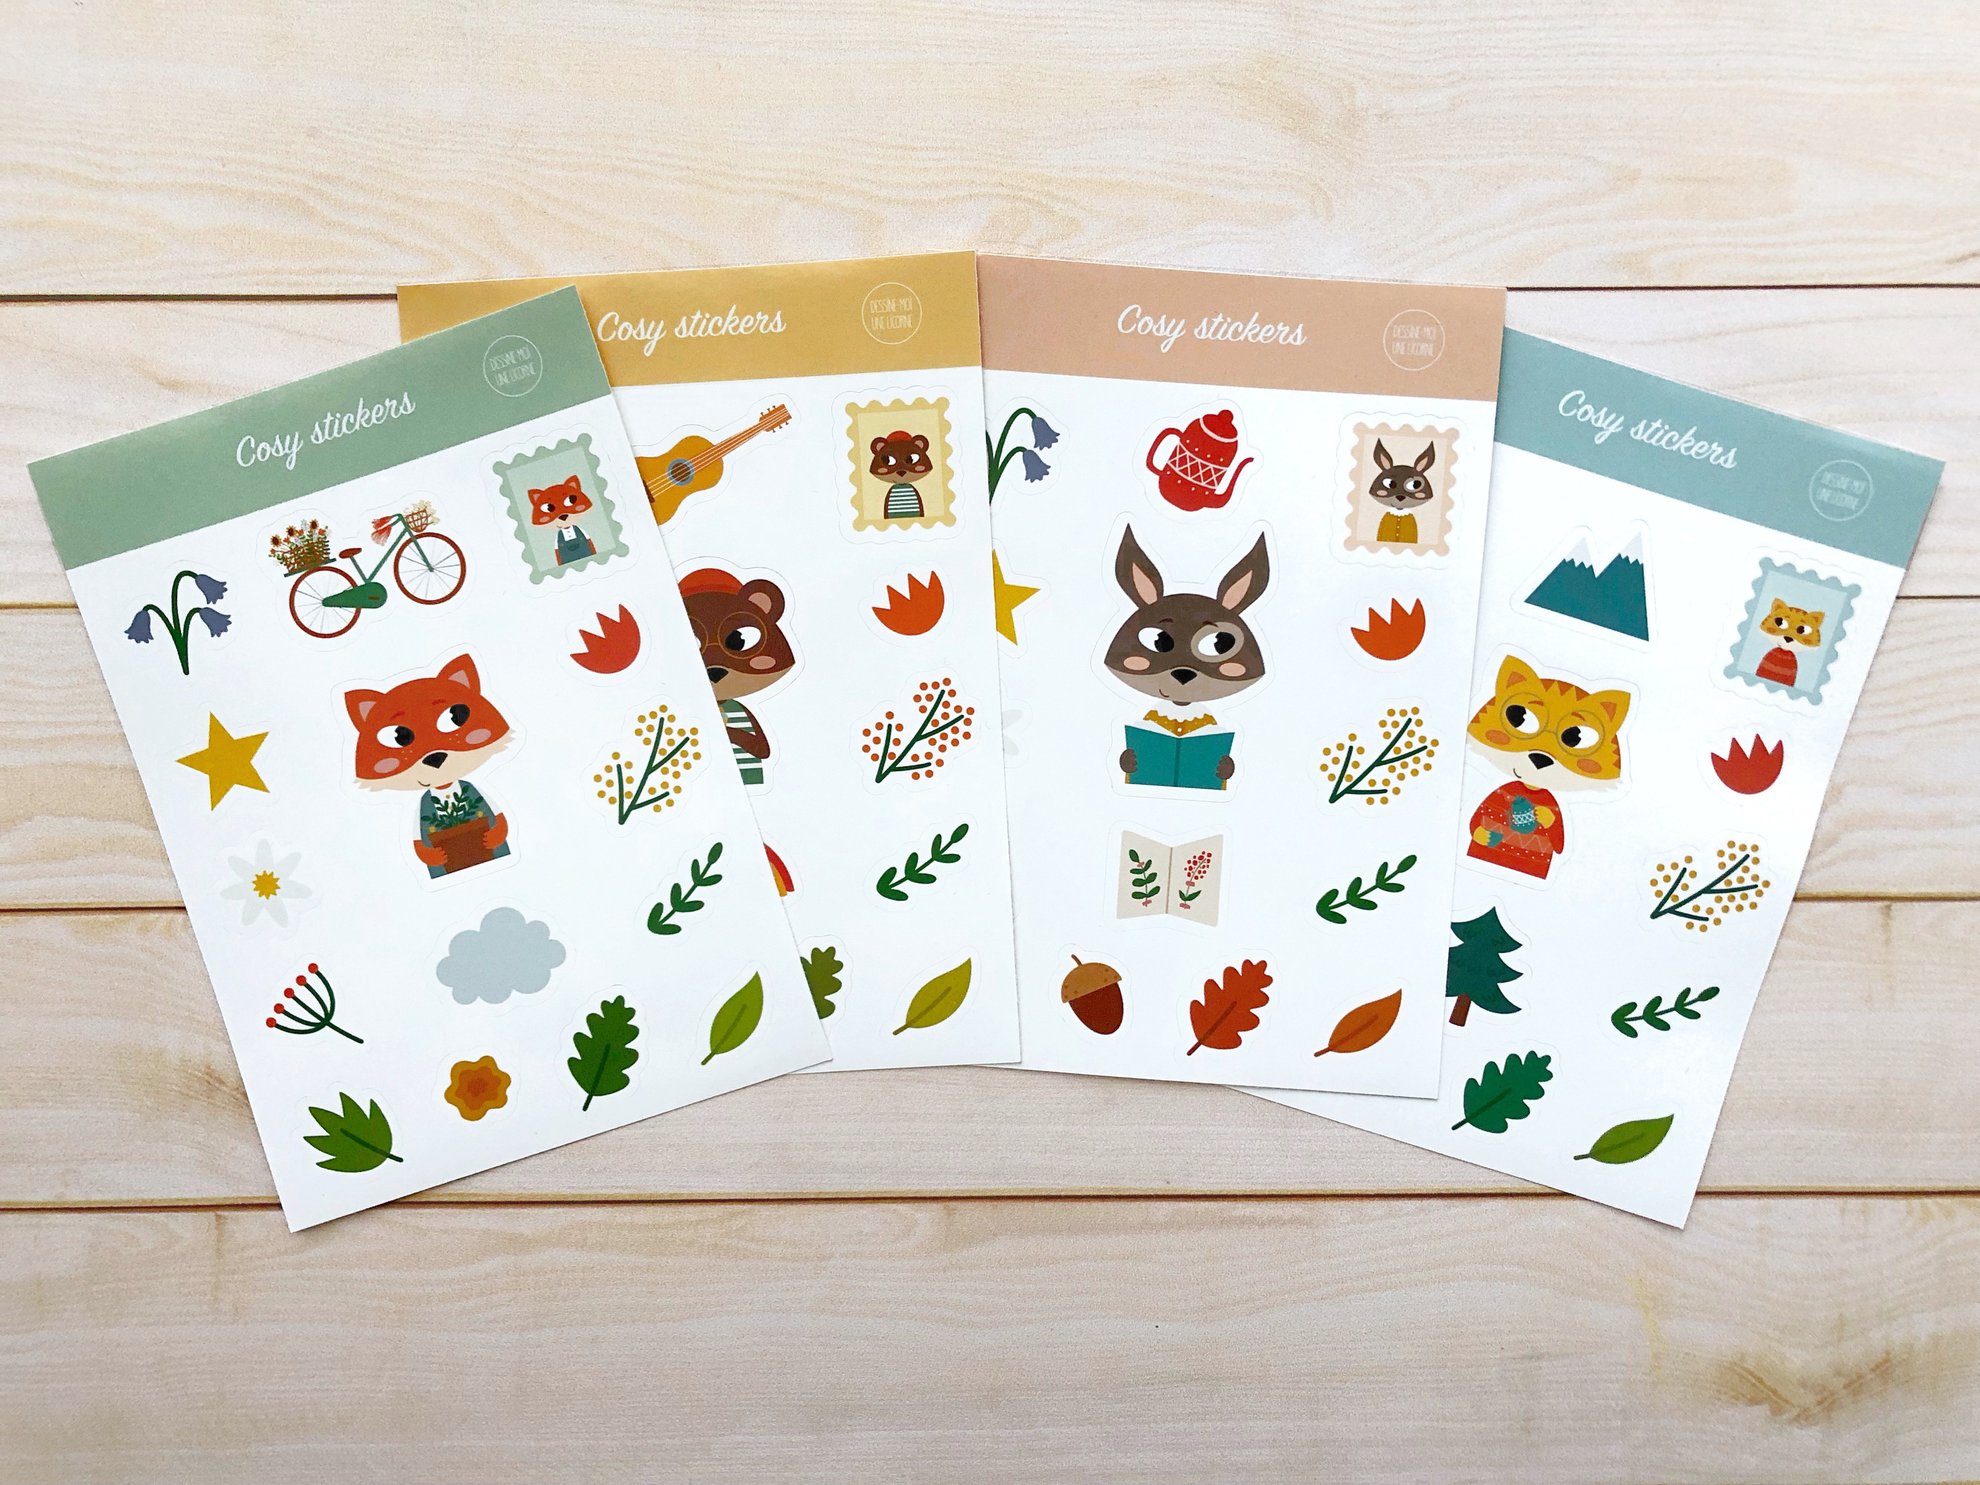 Dessinemoiunelicorne - Stickers animaux cosy (renard, ours, lapin, tigre) / Cosy animals stickers (fox, bear, rabbit, tiger)